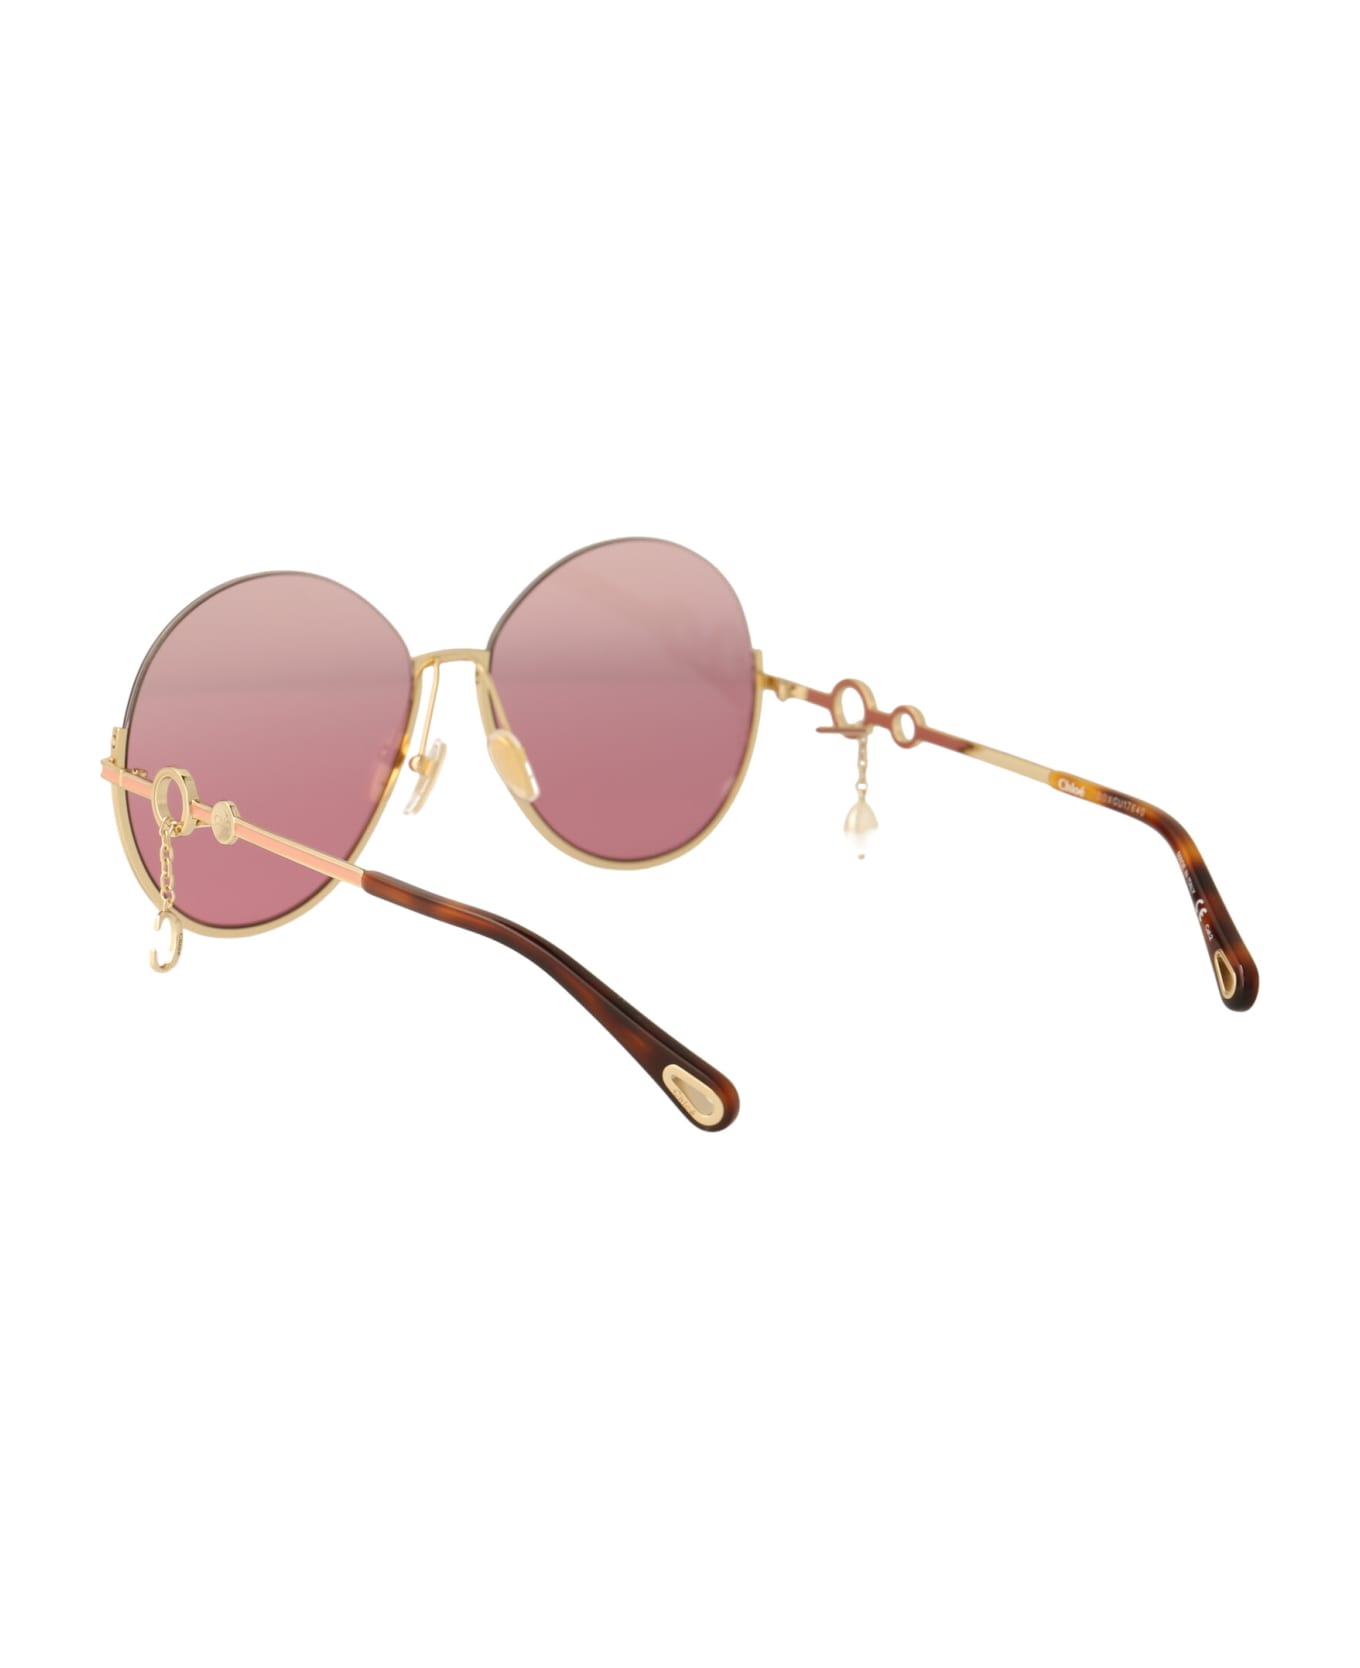 Chloé Eyewear Ch0067s Sunglasses - 004 GOLD GOLD PINK